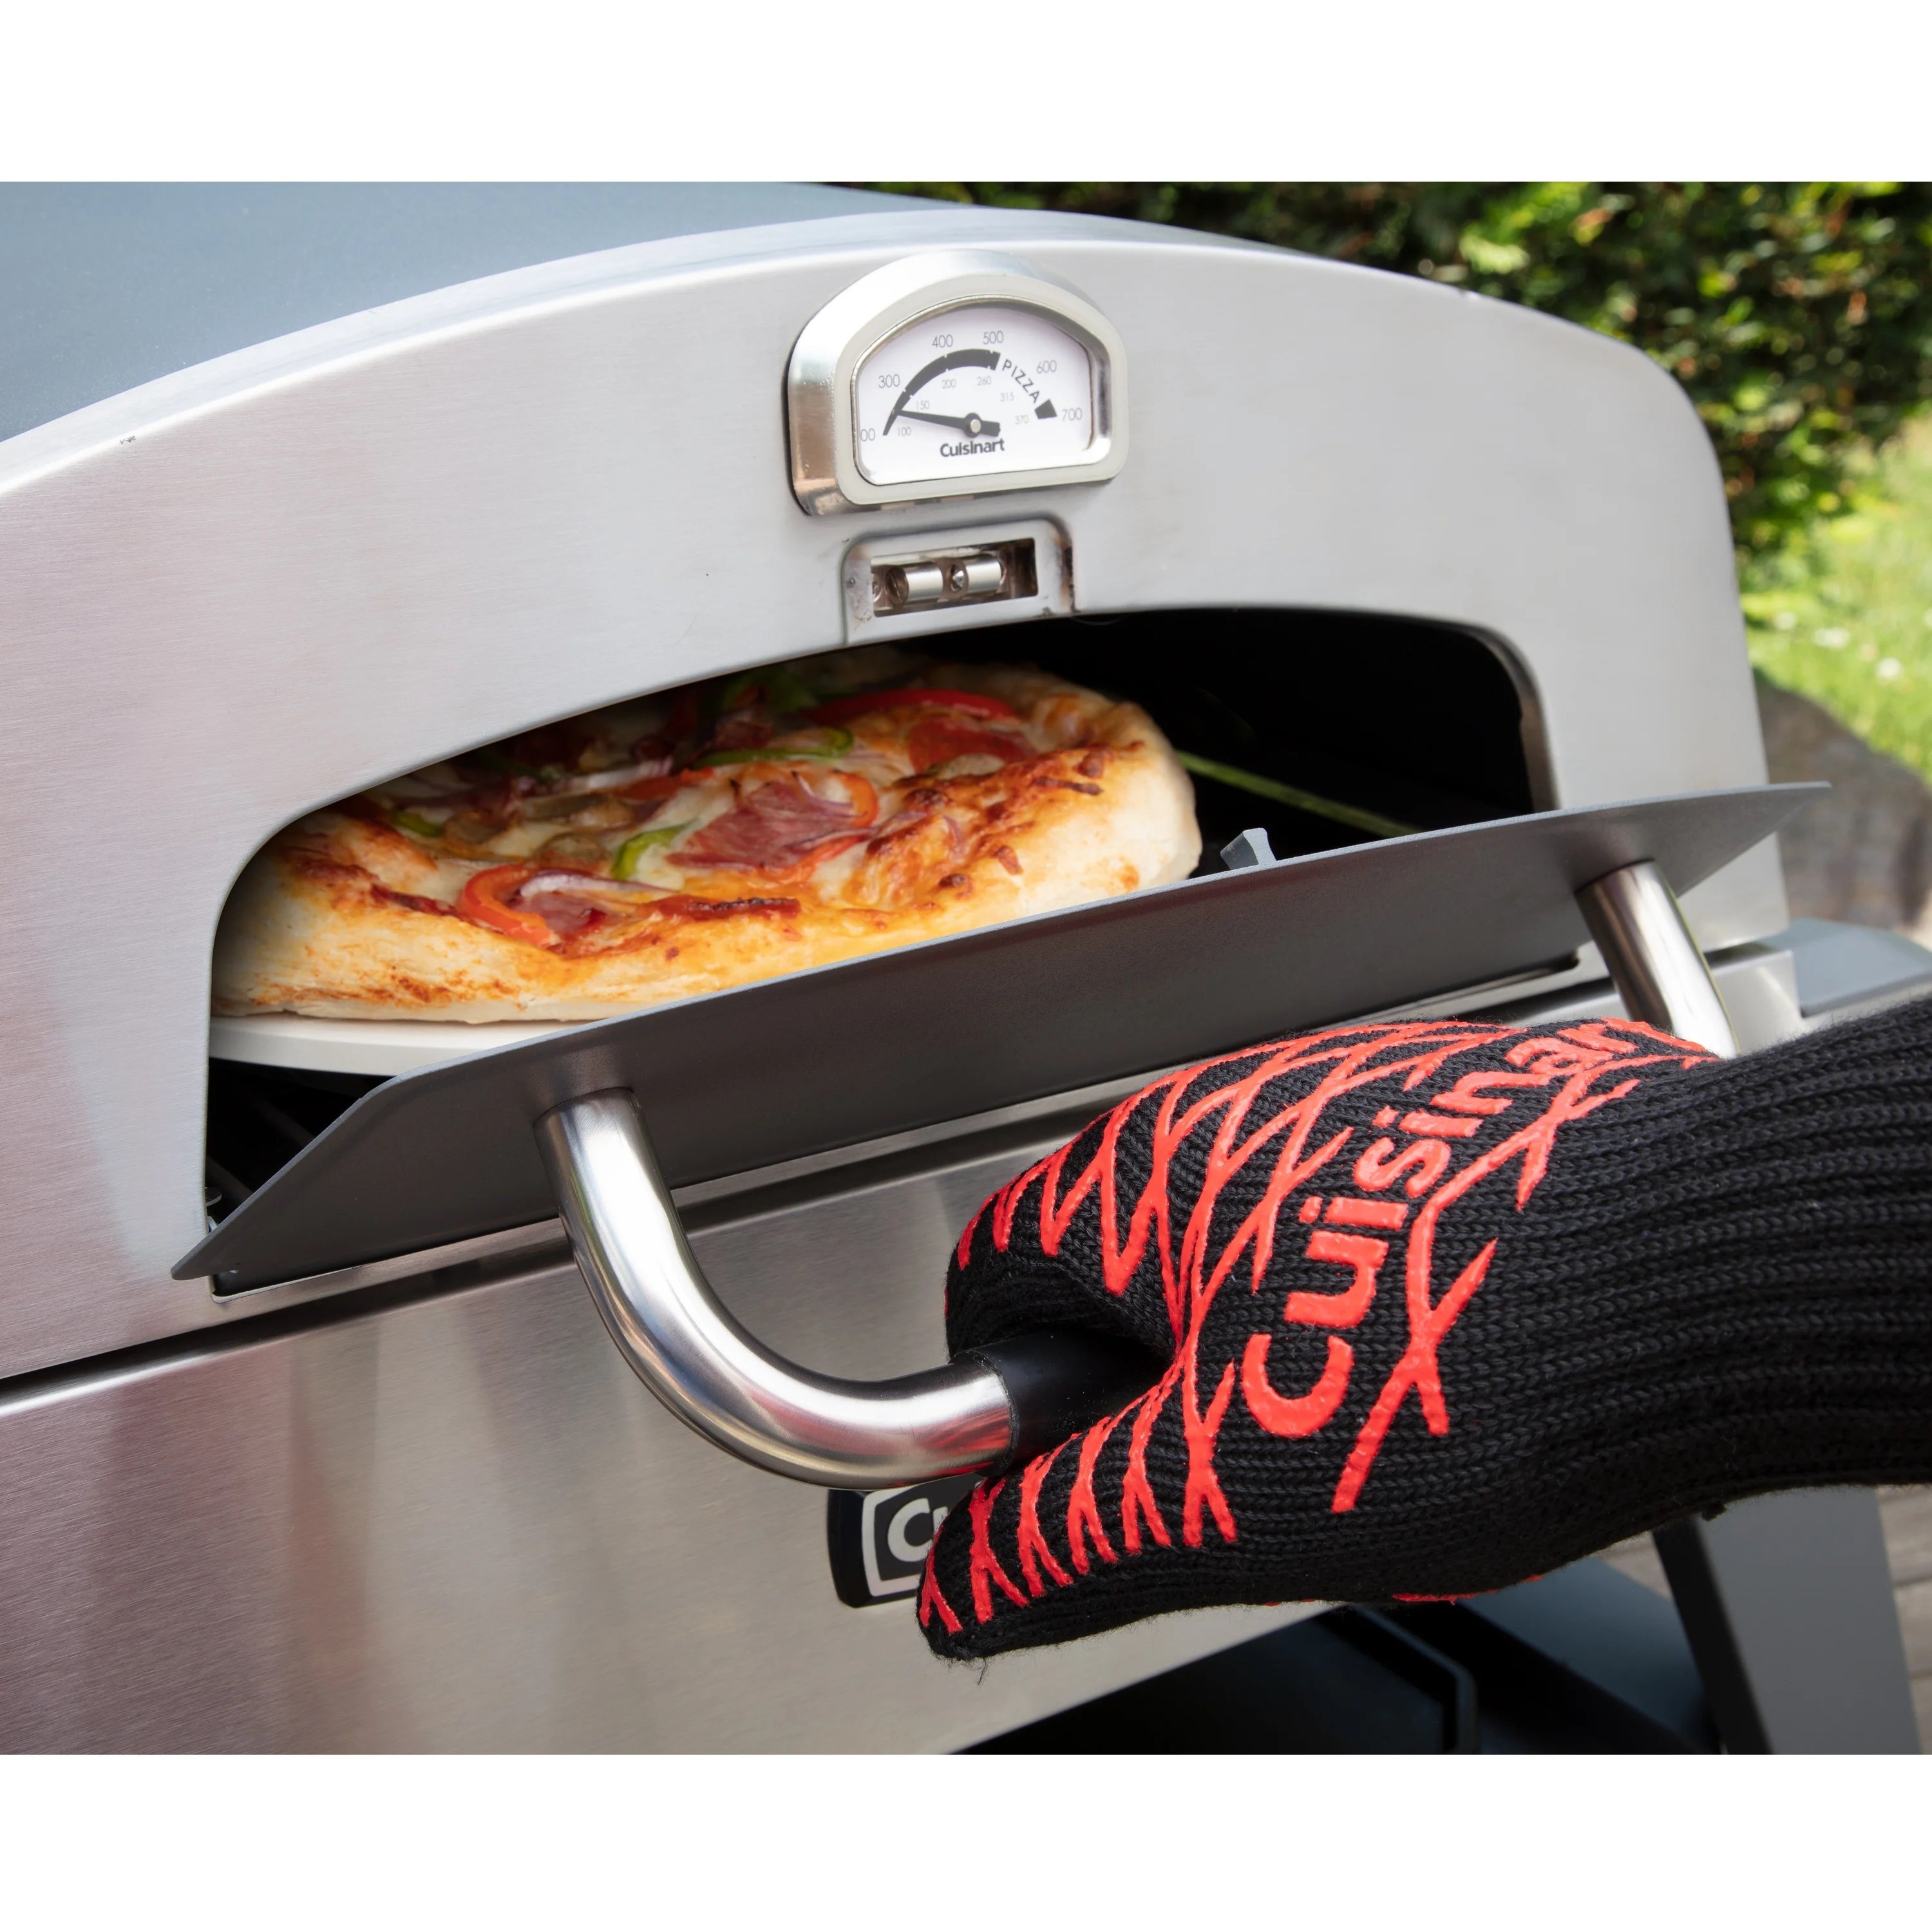 Outdoor 3-in-1 Pizza Oven